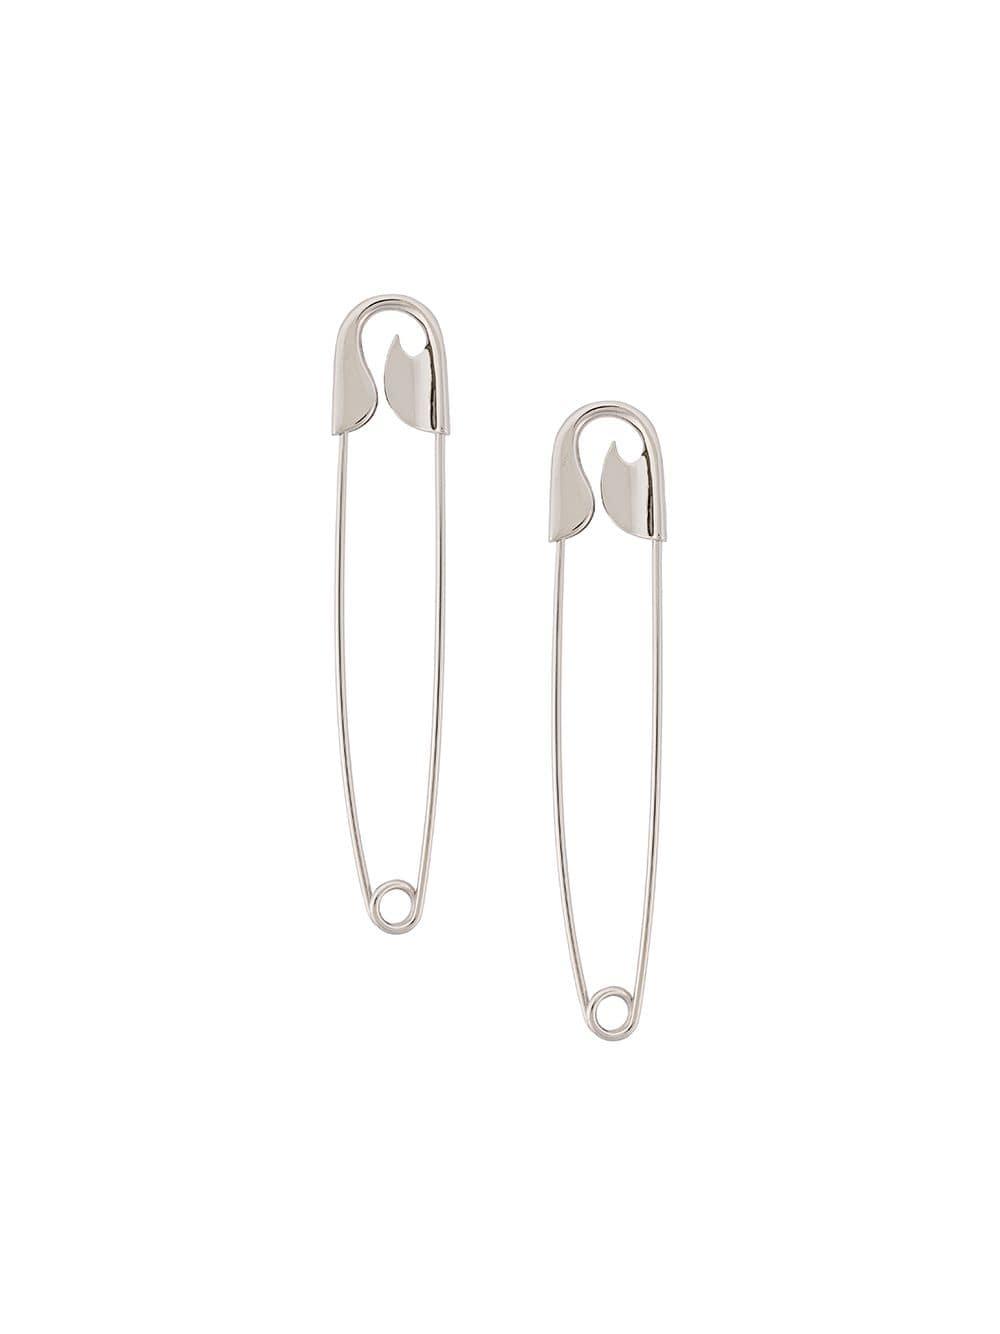 Balenciaga Safety Xl Earrings in Silver (Metallic) - Lyst